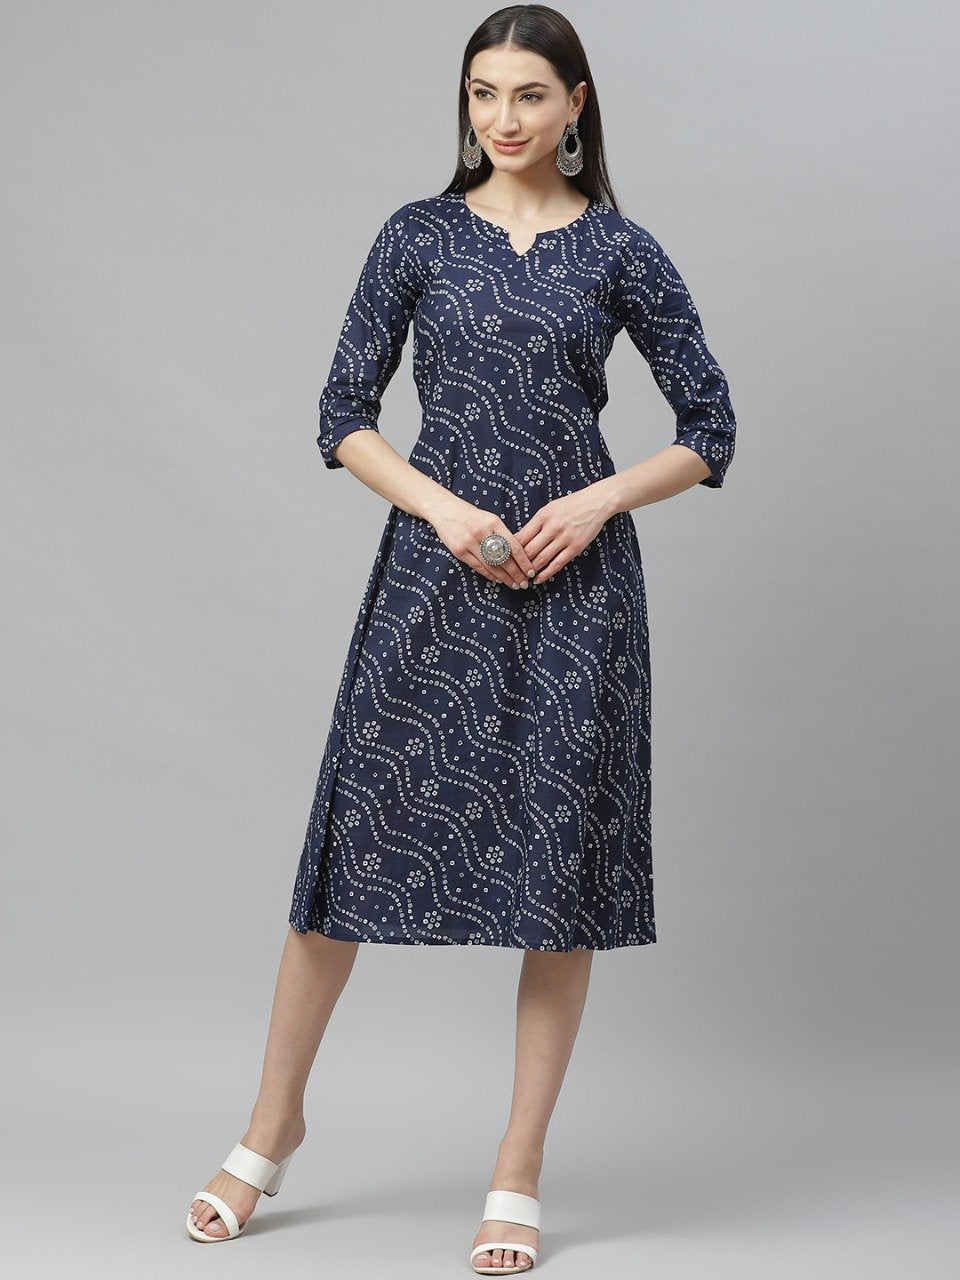 Women's Navy Blue Cotton Printed 3/4 Sleeve Round Neck Casual Dress - Myshka